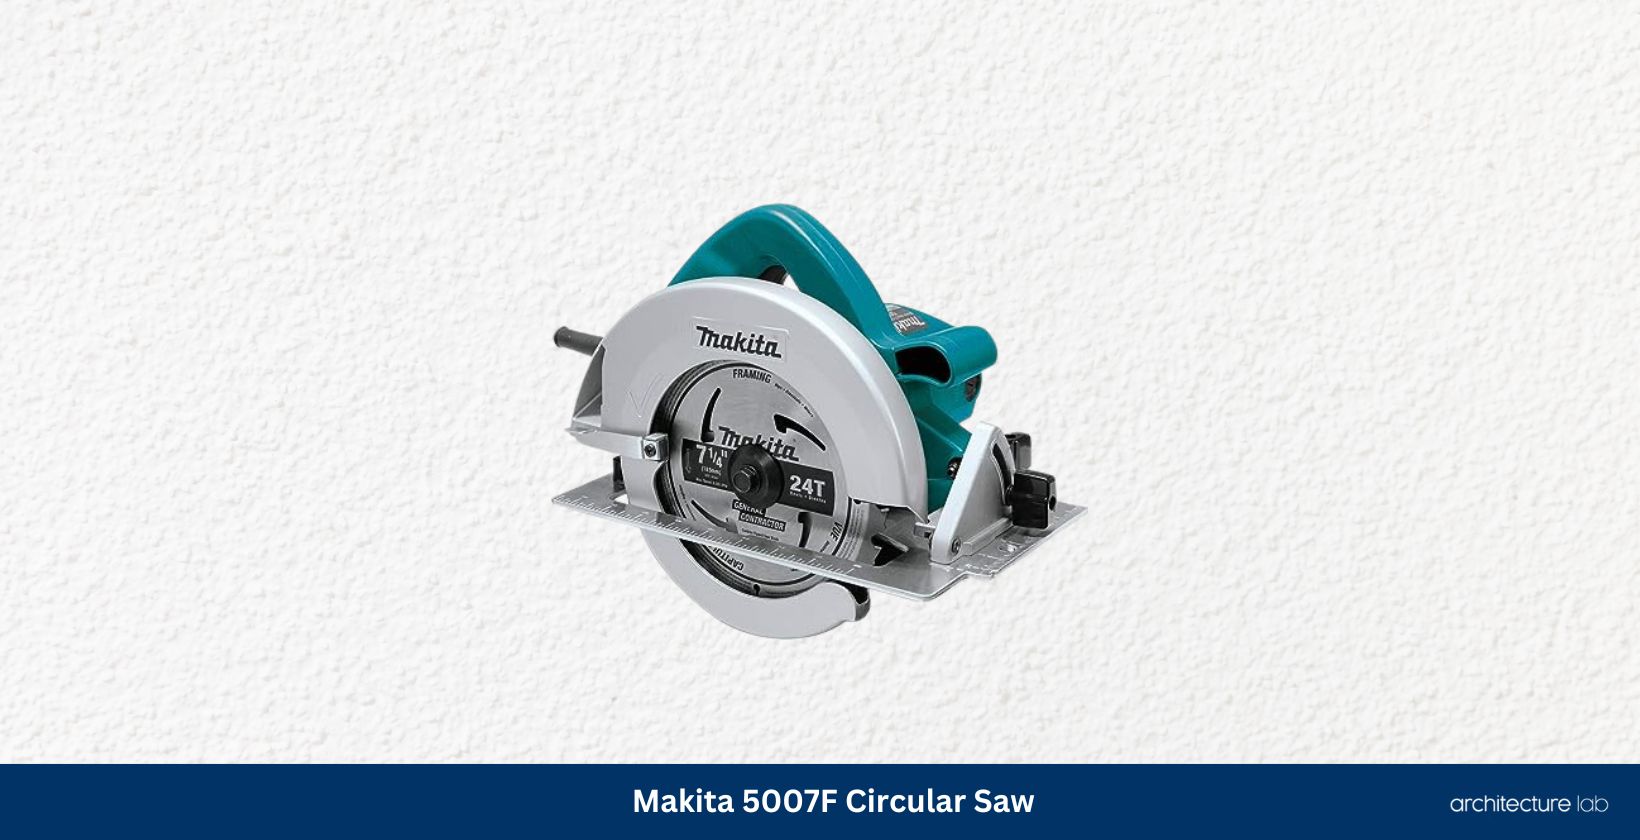 Makita 5007f circular saw